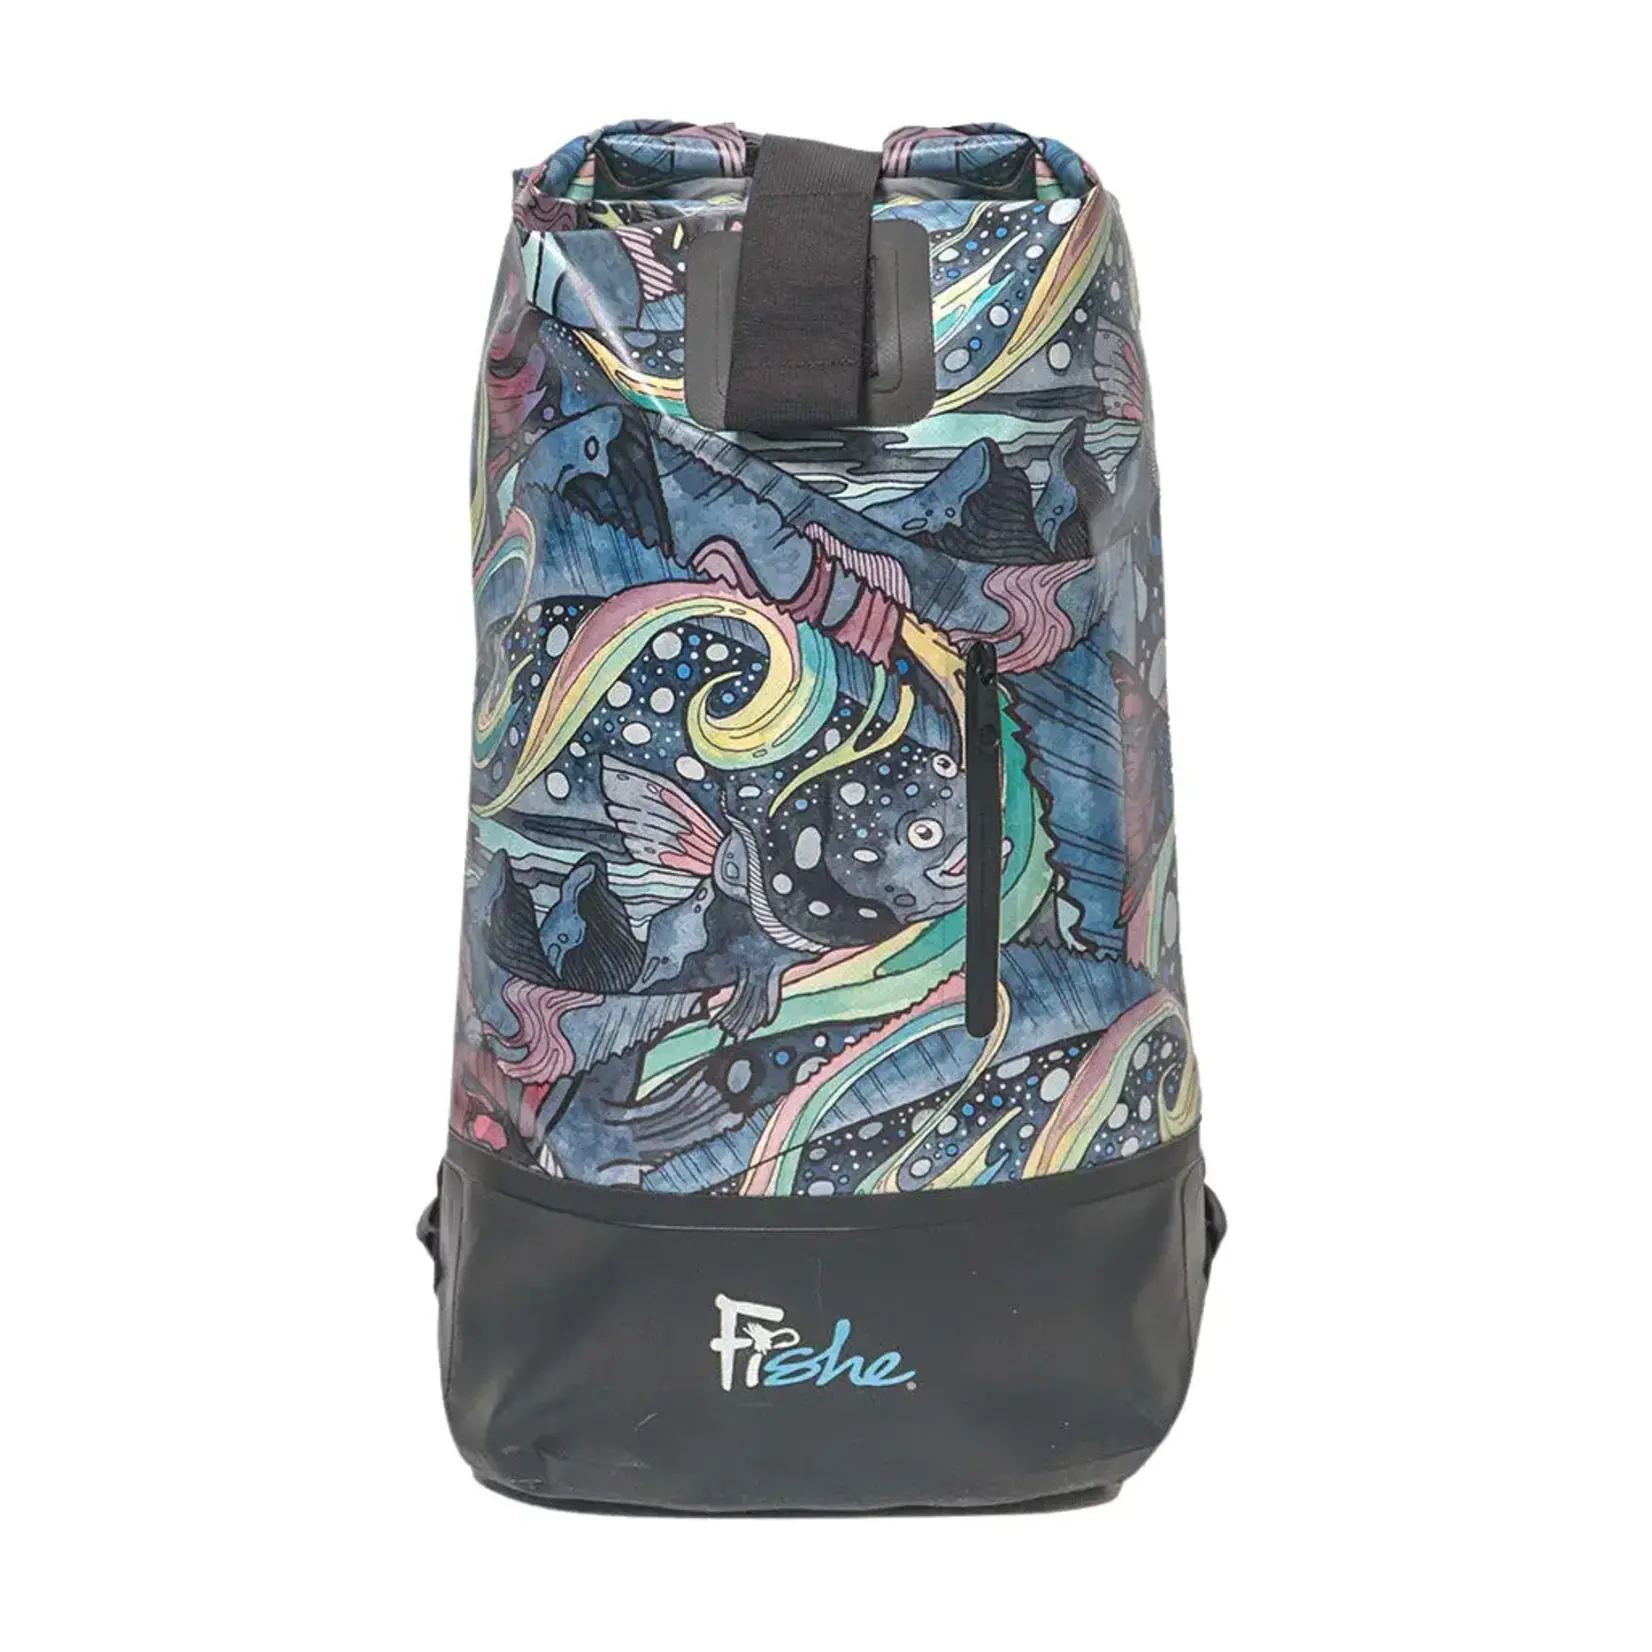 Fishe Backpack Dry Bag